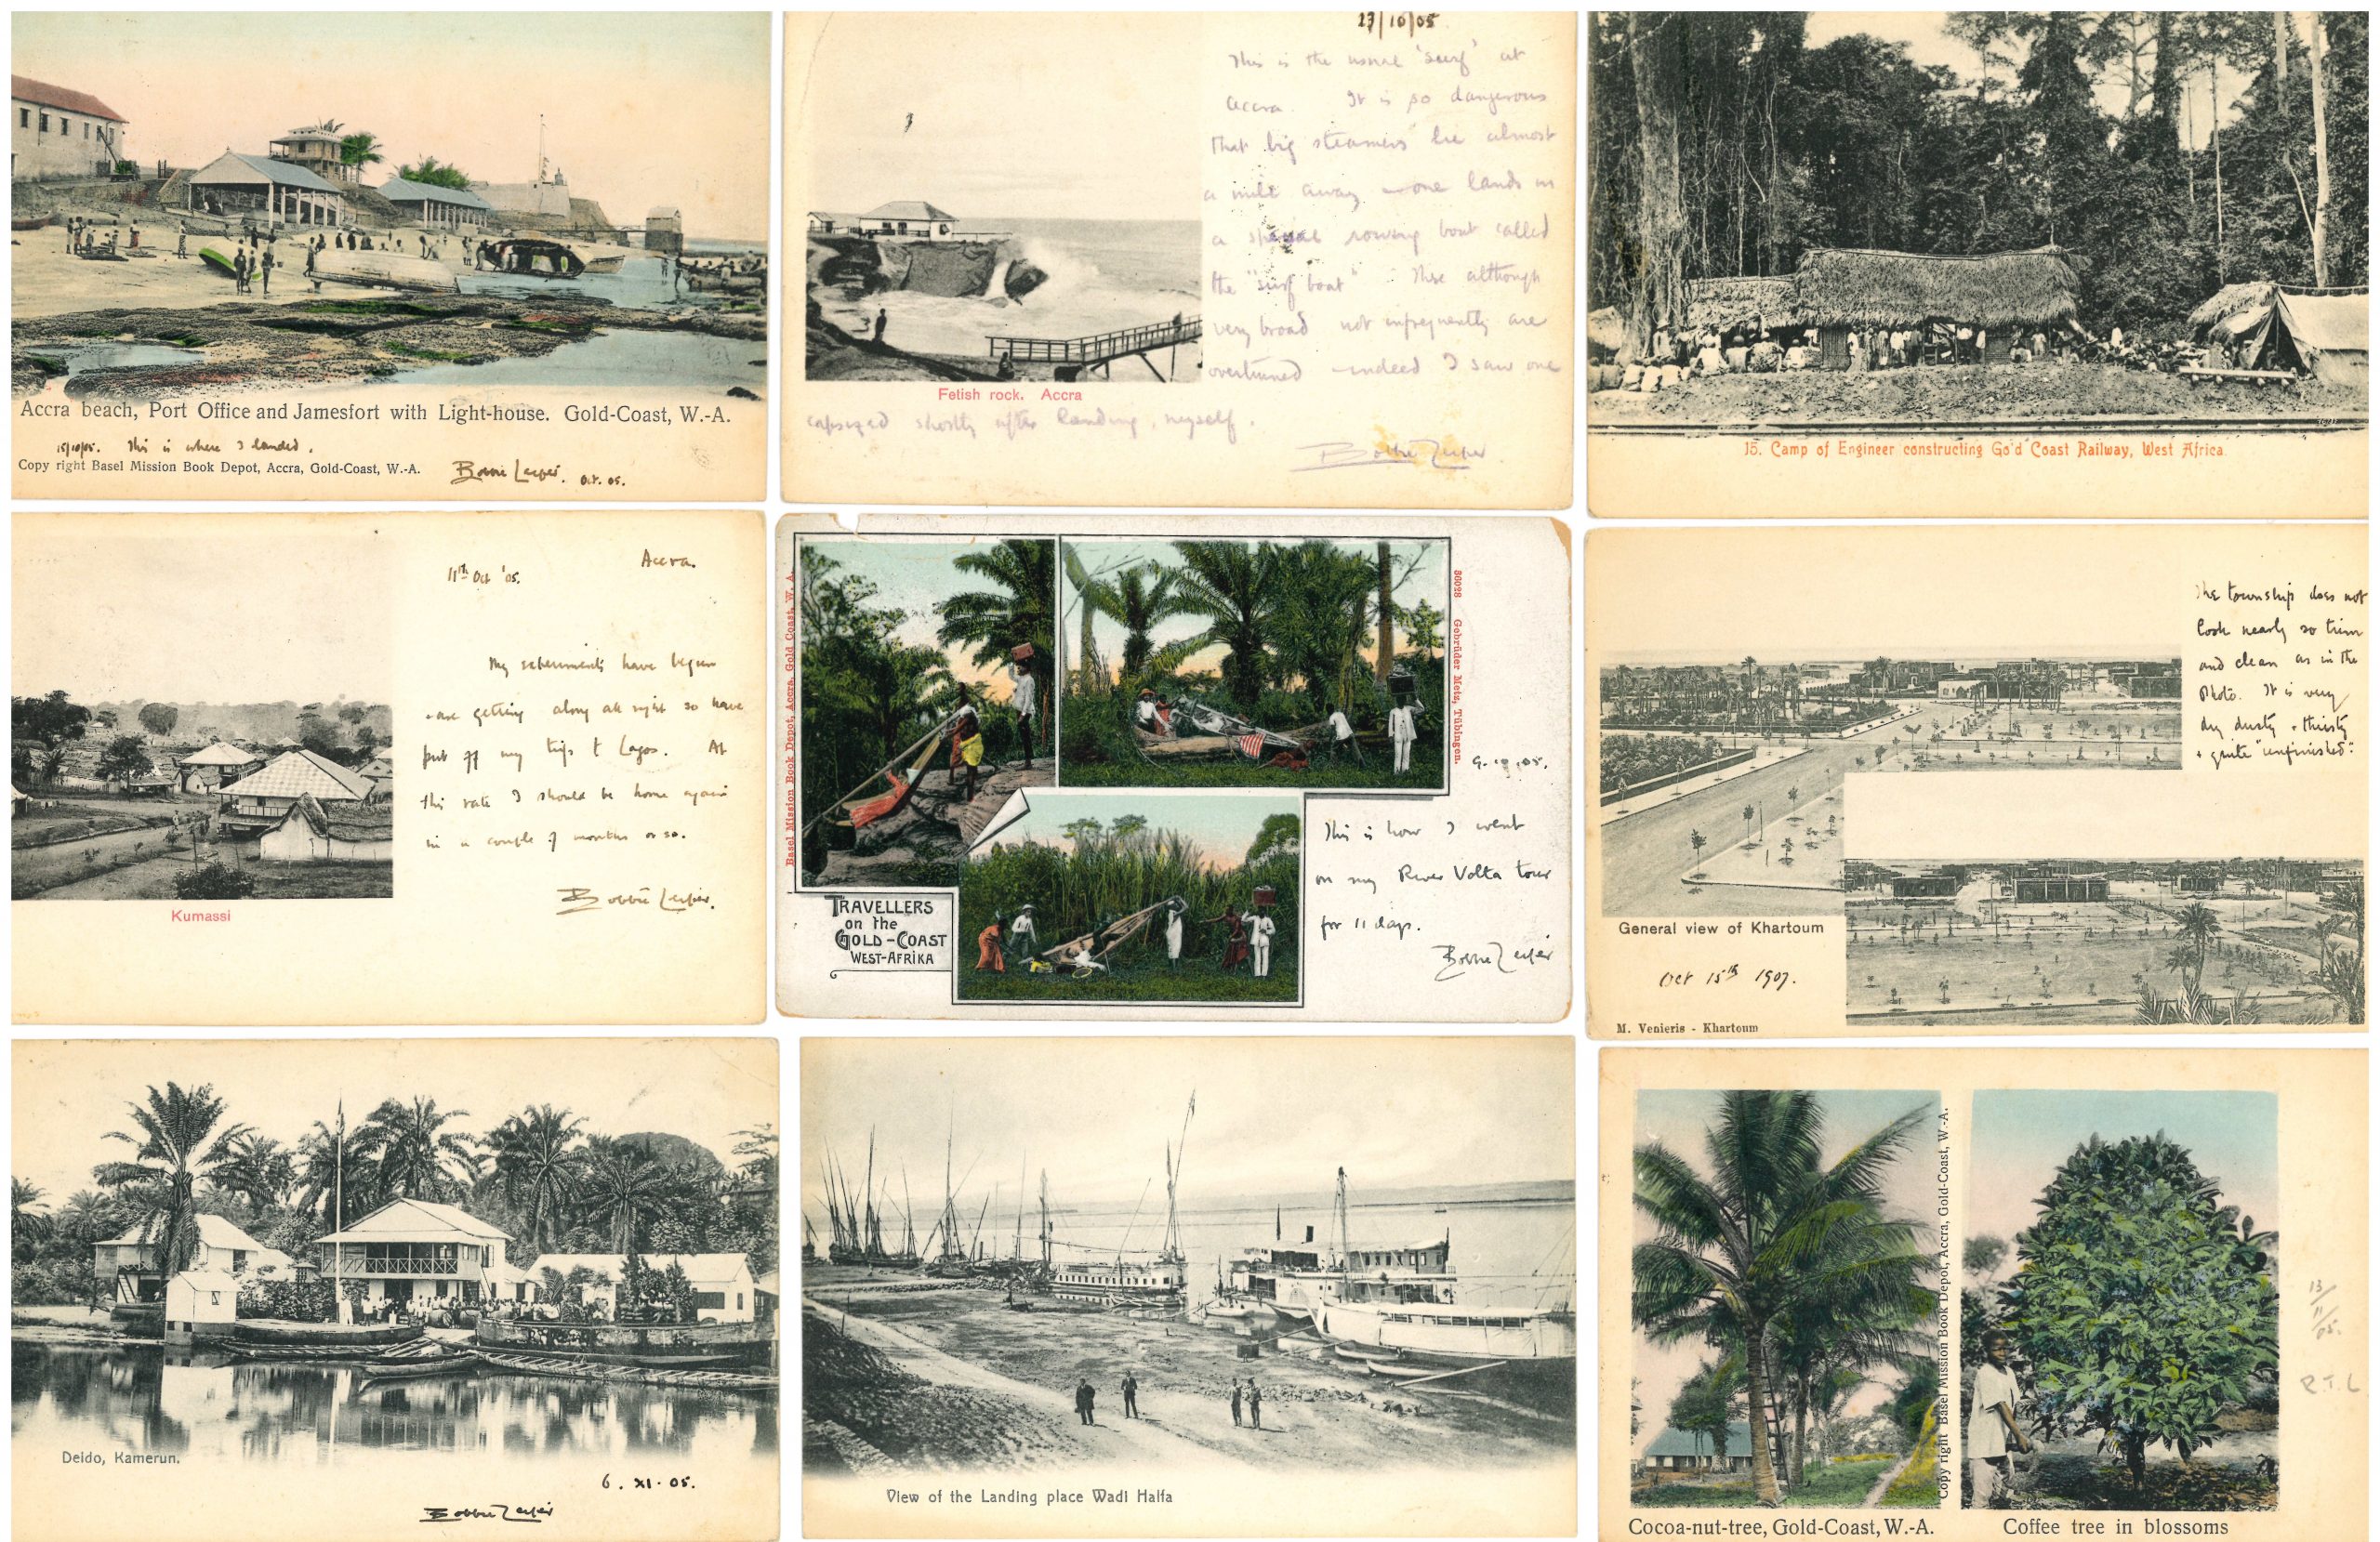 Leiper postcards